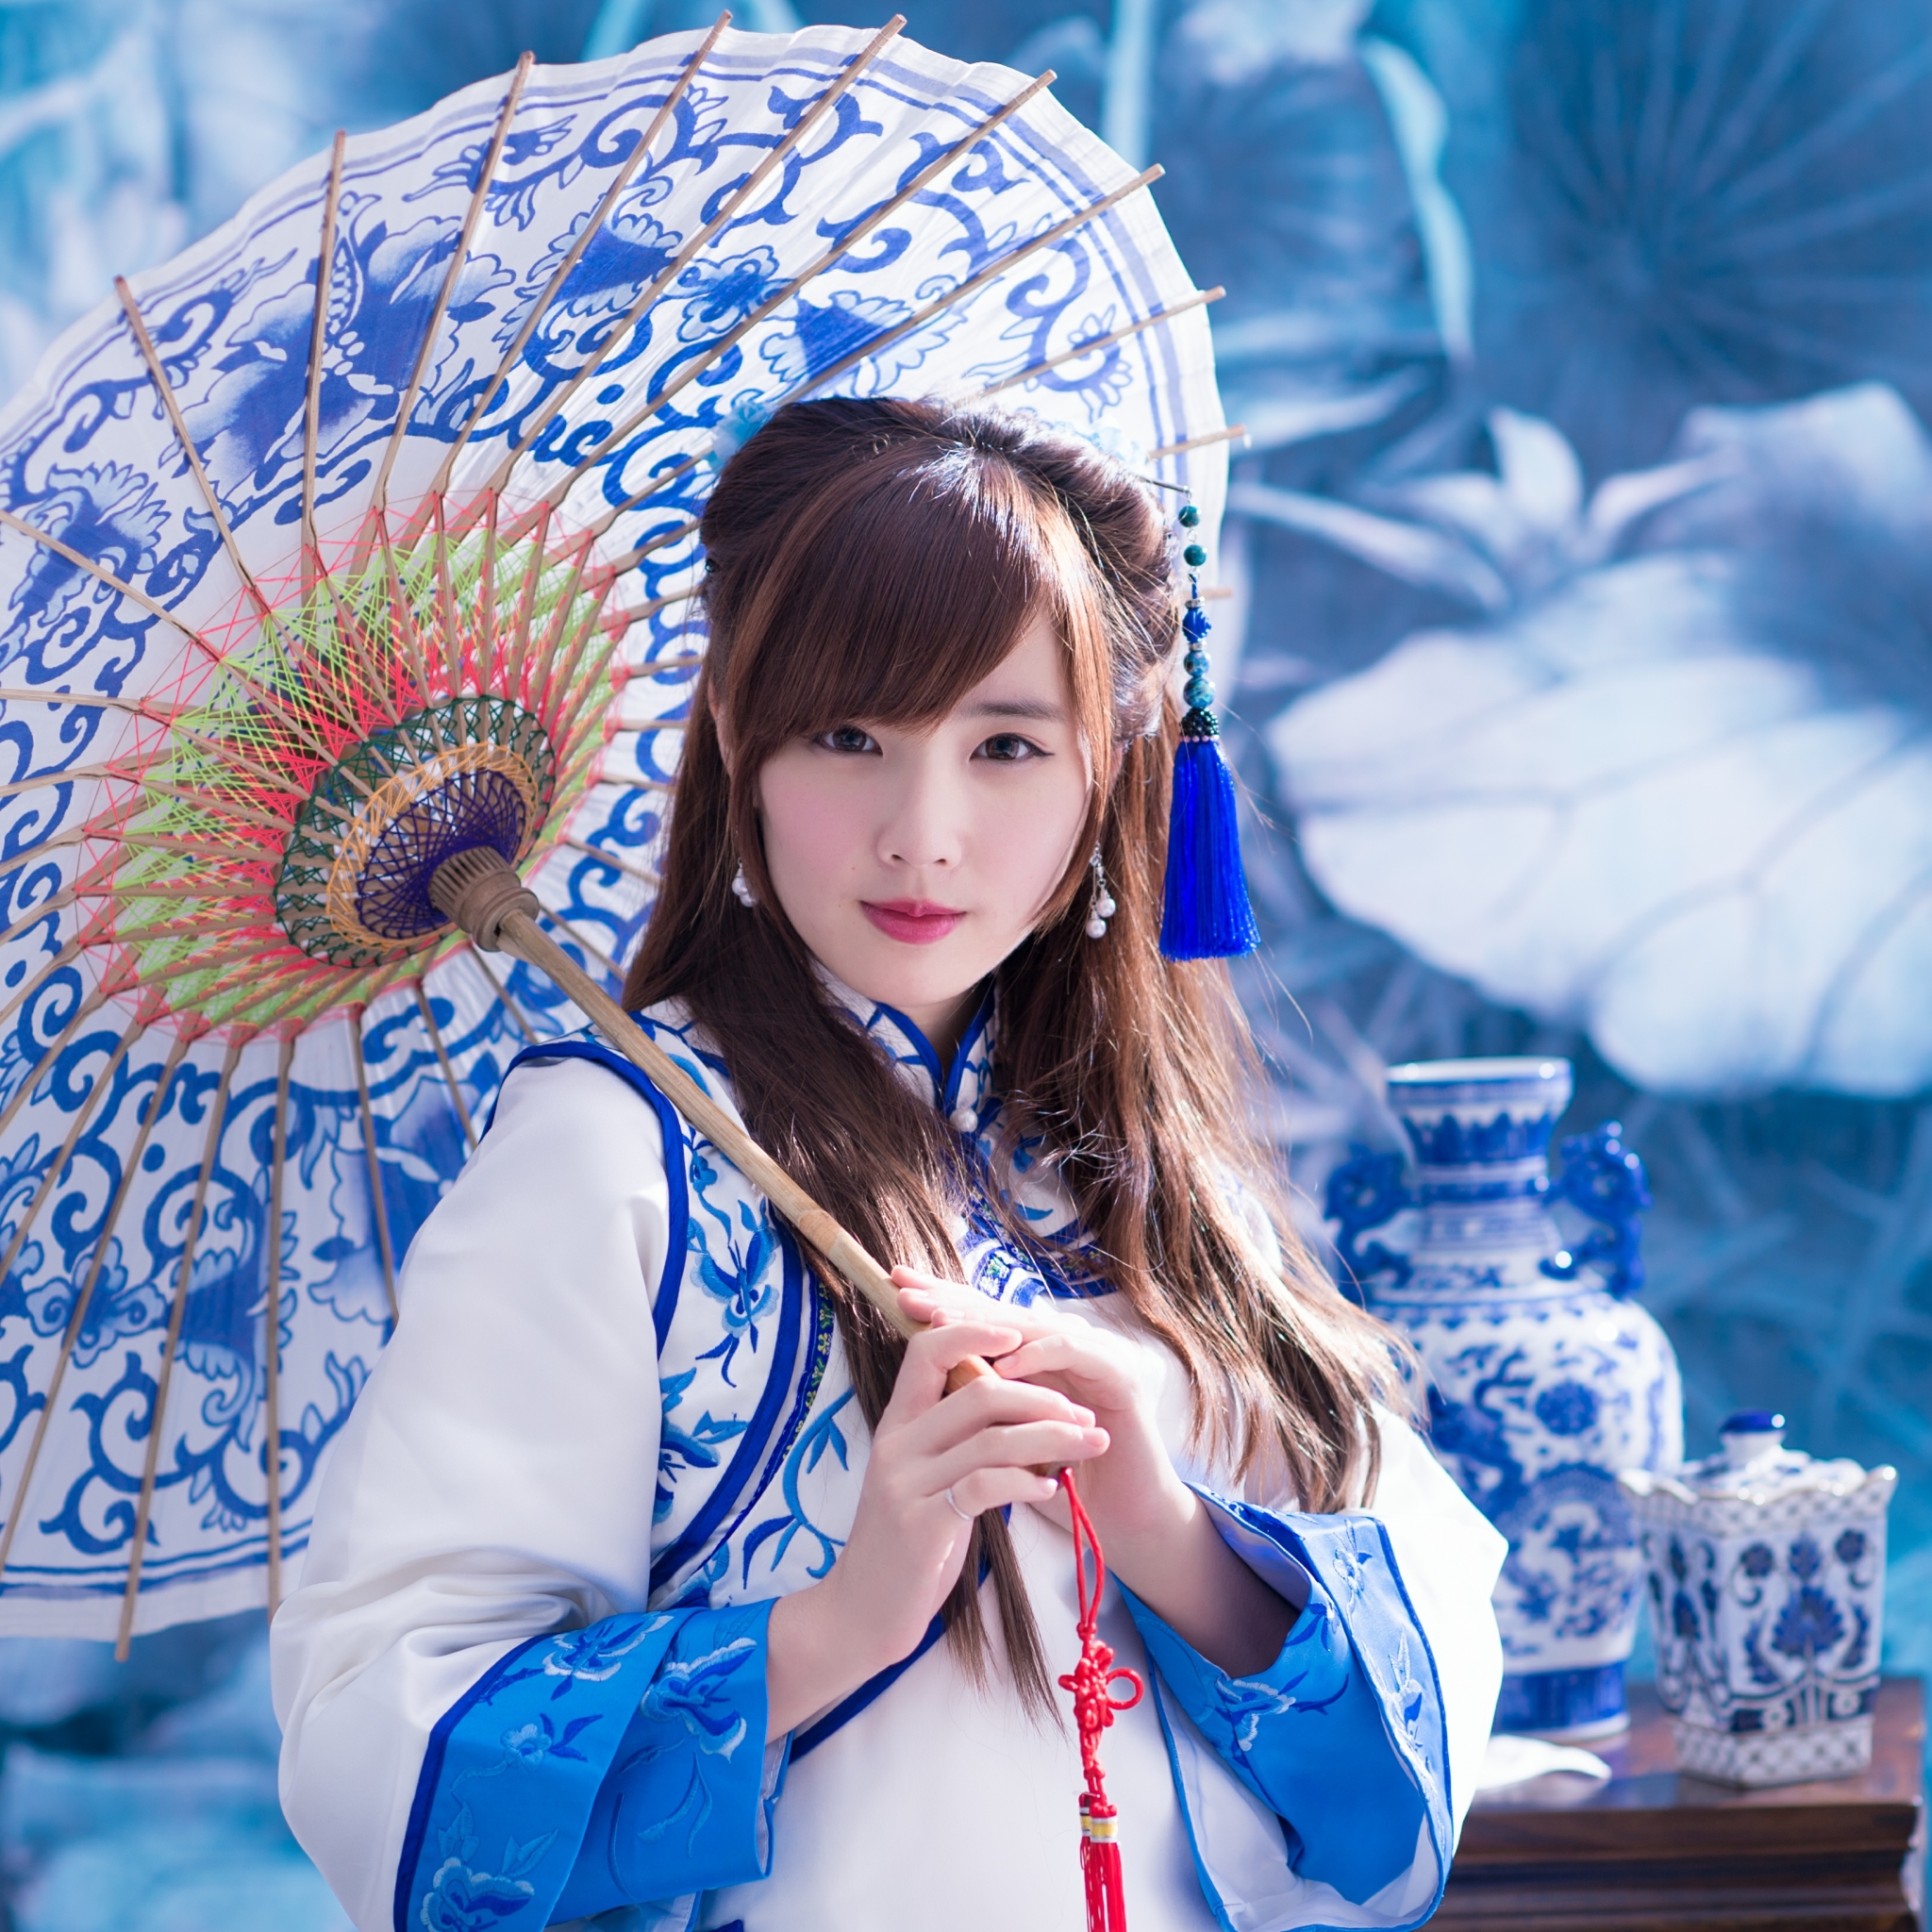 Sindy zheng. Красивые японки. Японка с зонтиком. Красивые китаянки. Японки обои на рабочий стол.